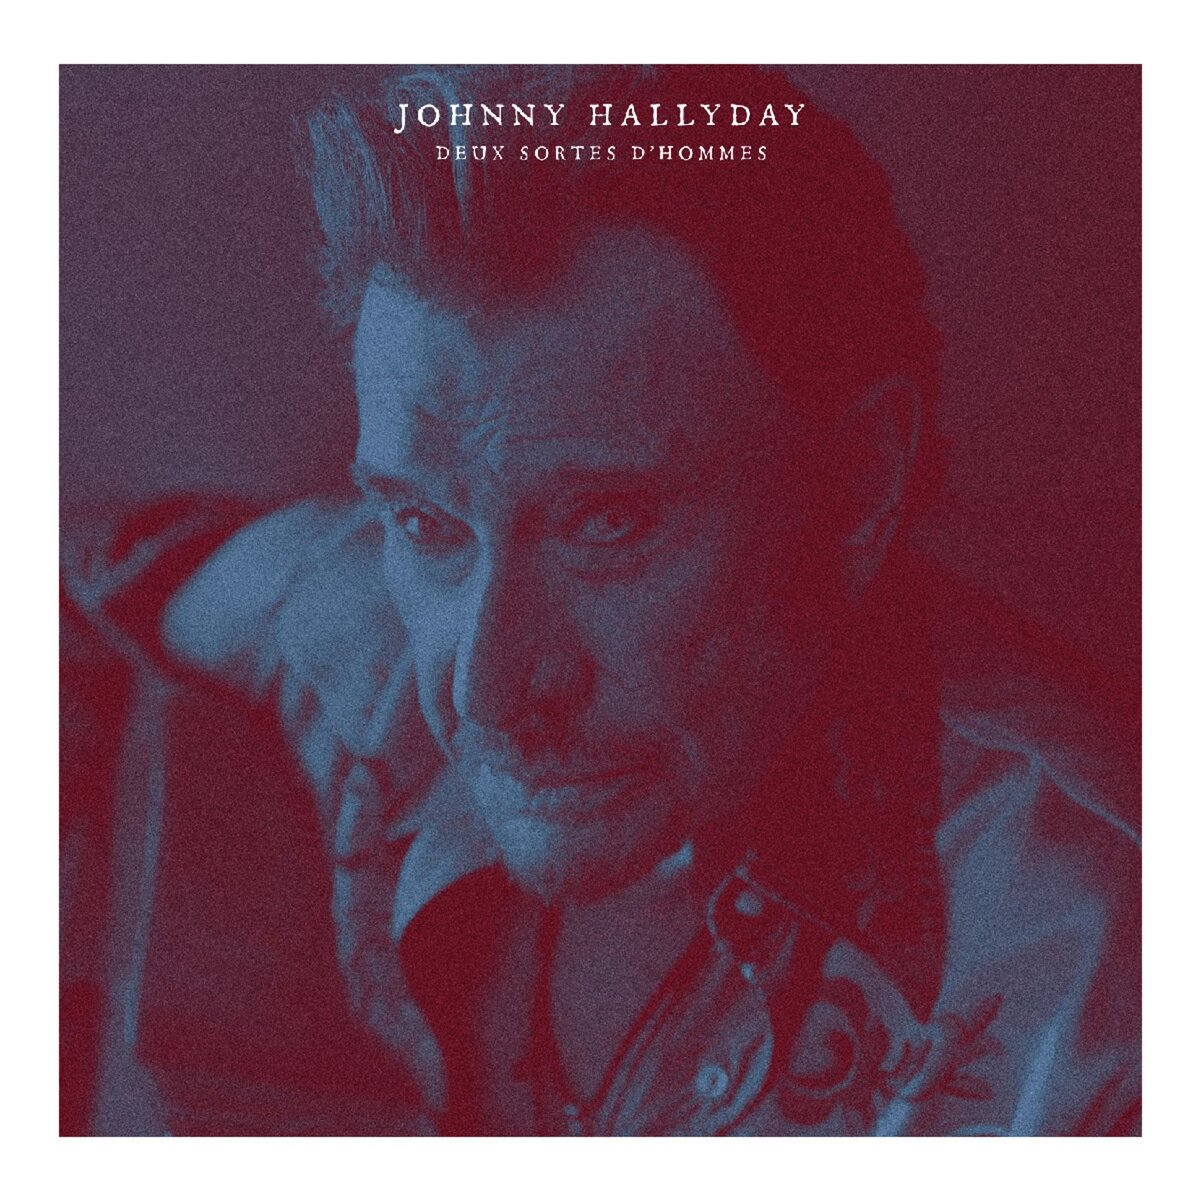 Warner Deux sortes d&rsquo;hommes / Nashville Blues - Johnny Hallyday Maxi 45 tours bleu